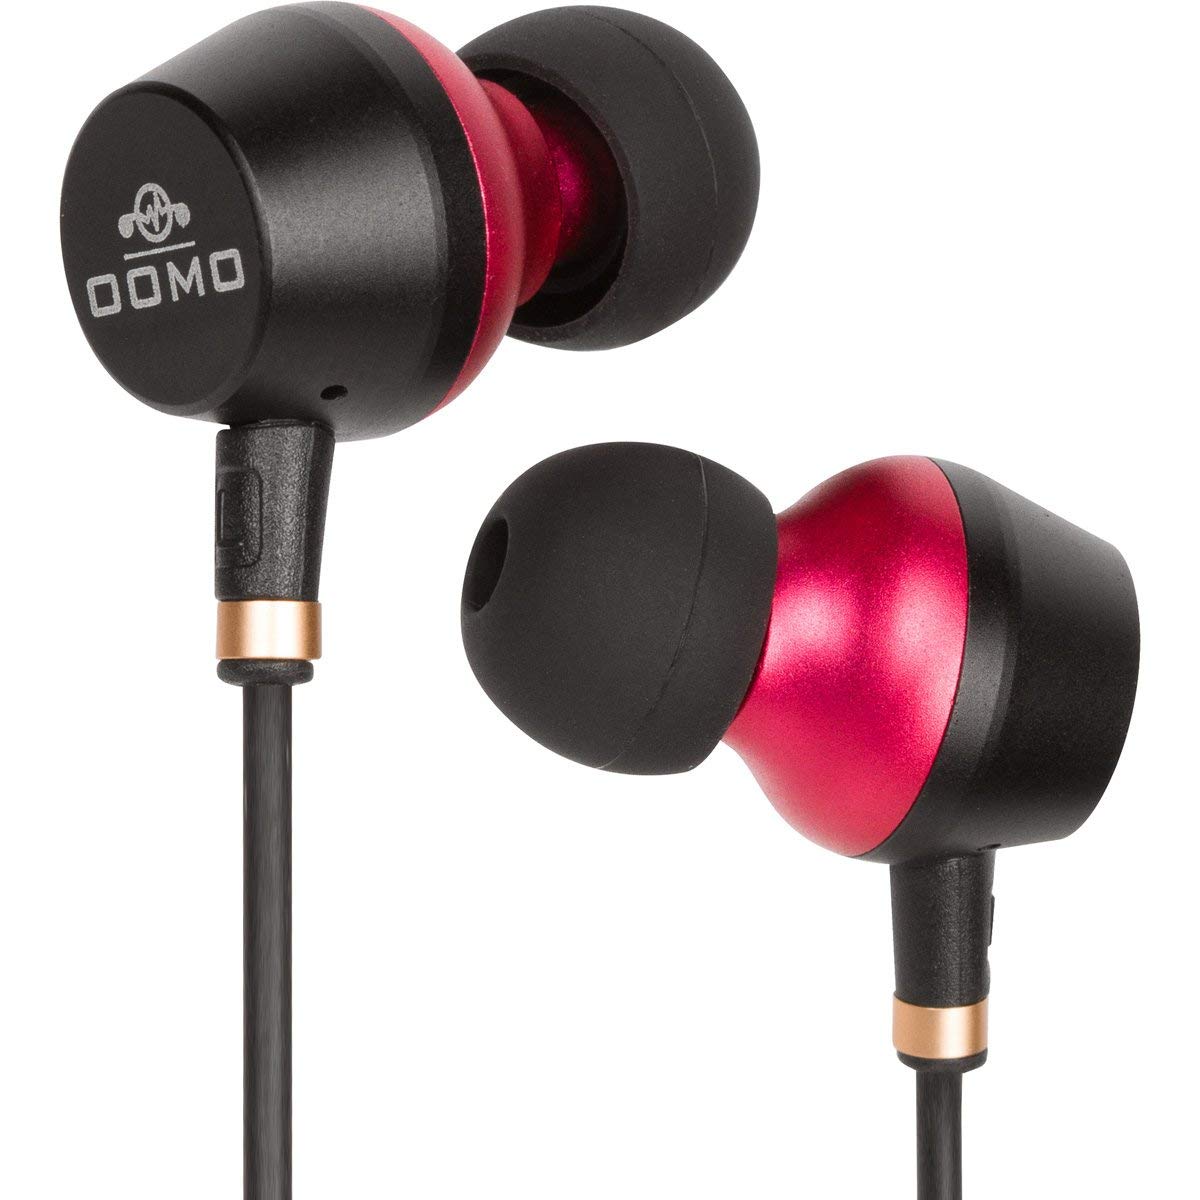 Oomo 3D 5.1 Surround Sound Earbuds